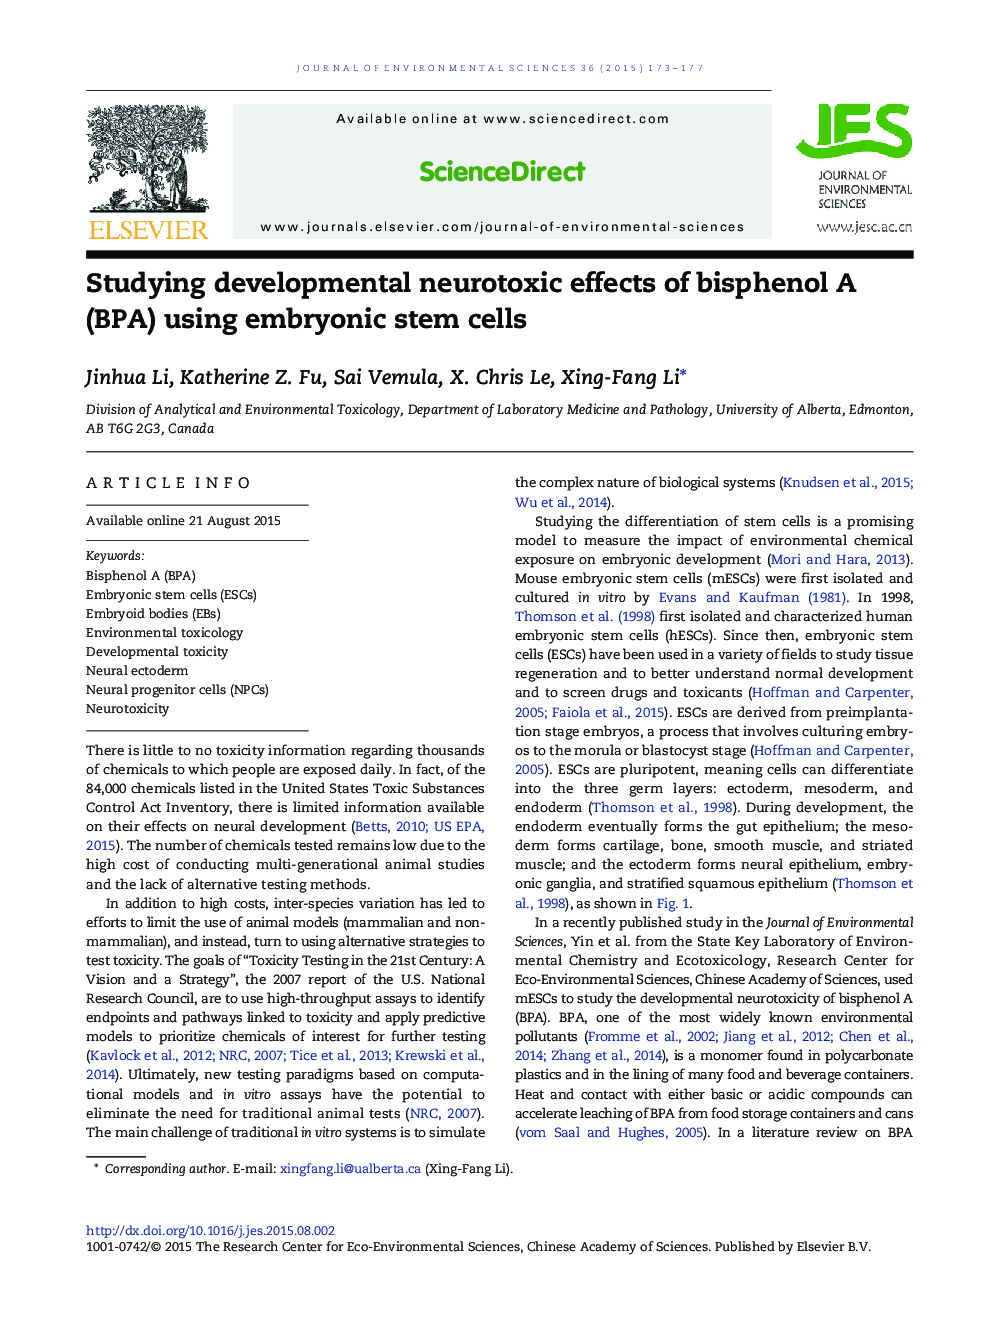 Studying developmental neurotoxic effects of bisphenol A (BPA) using embryonic stem cells